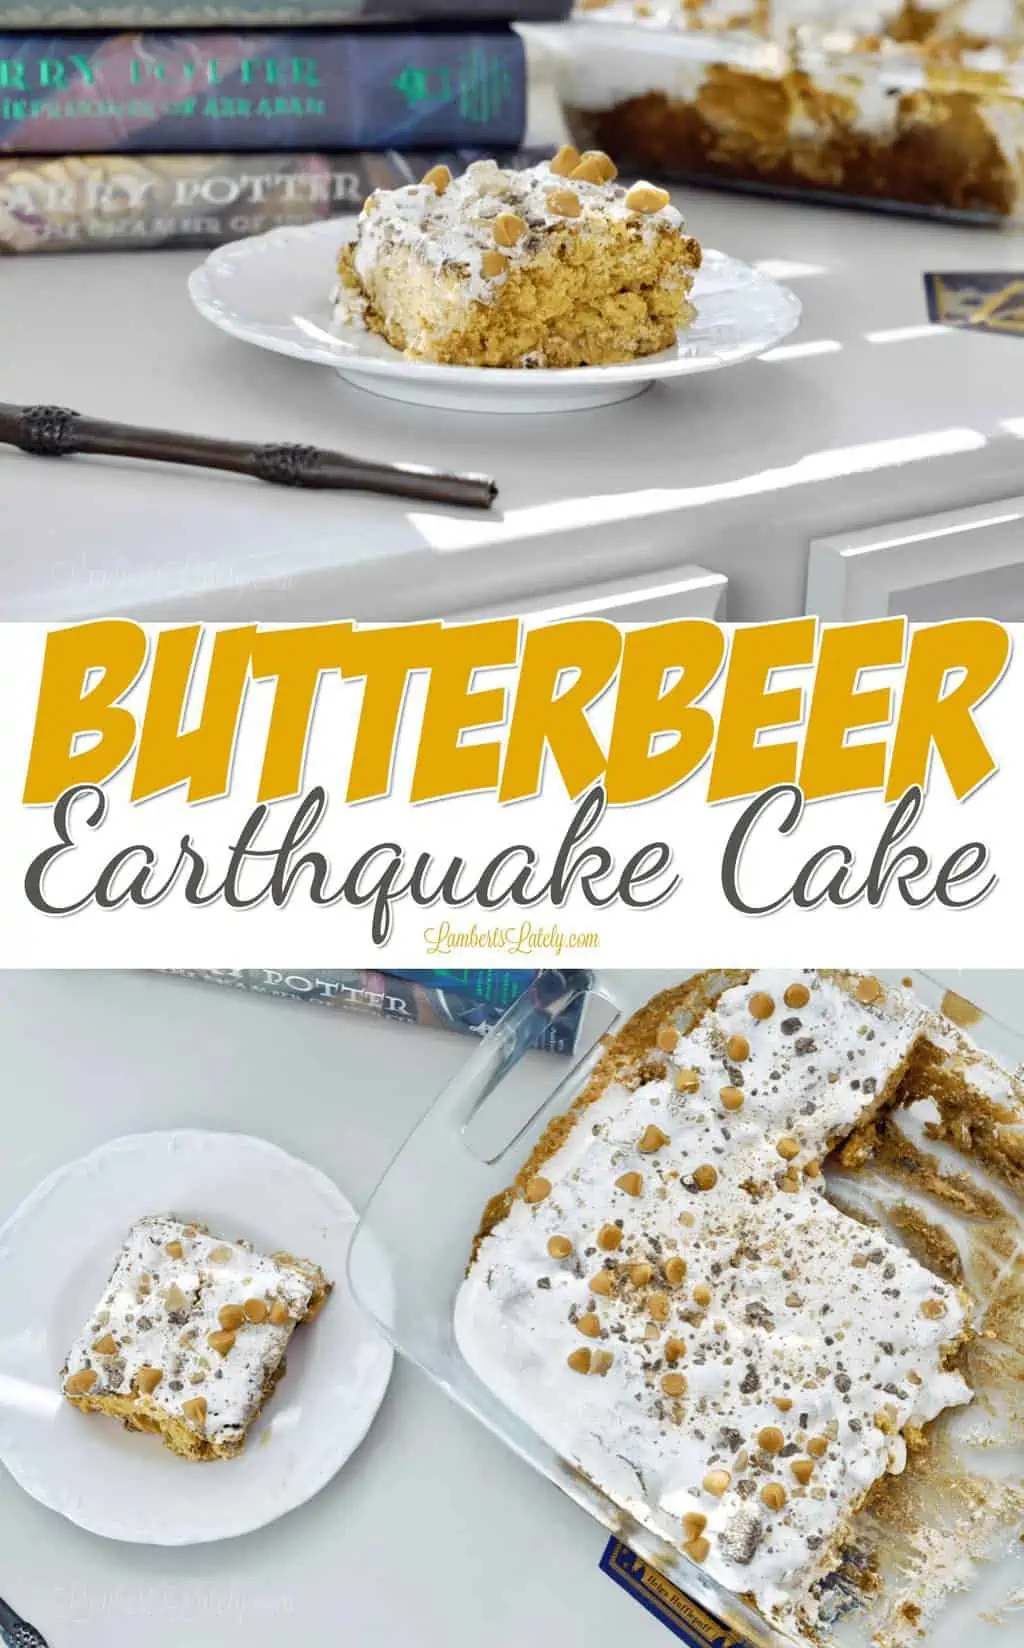 Butterbeer Earthquake Cake.